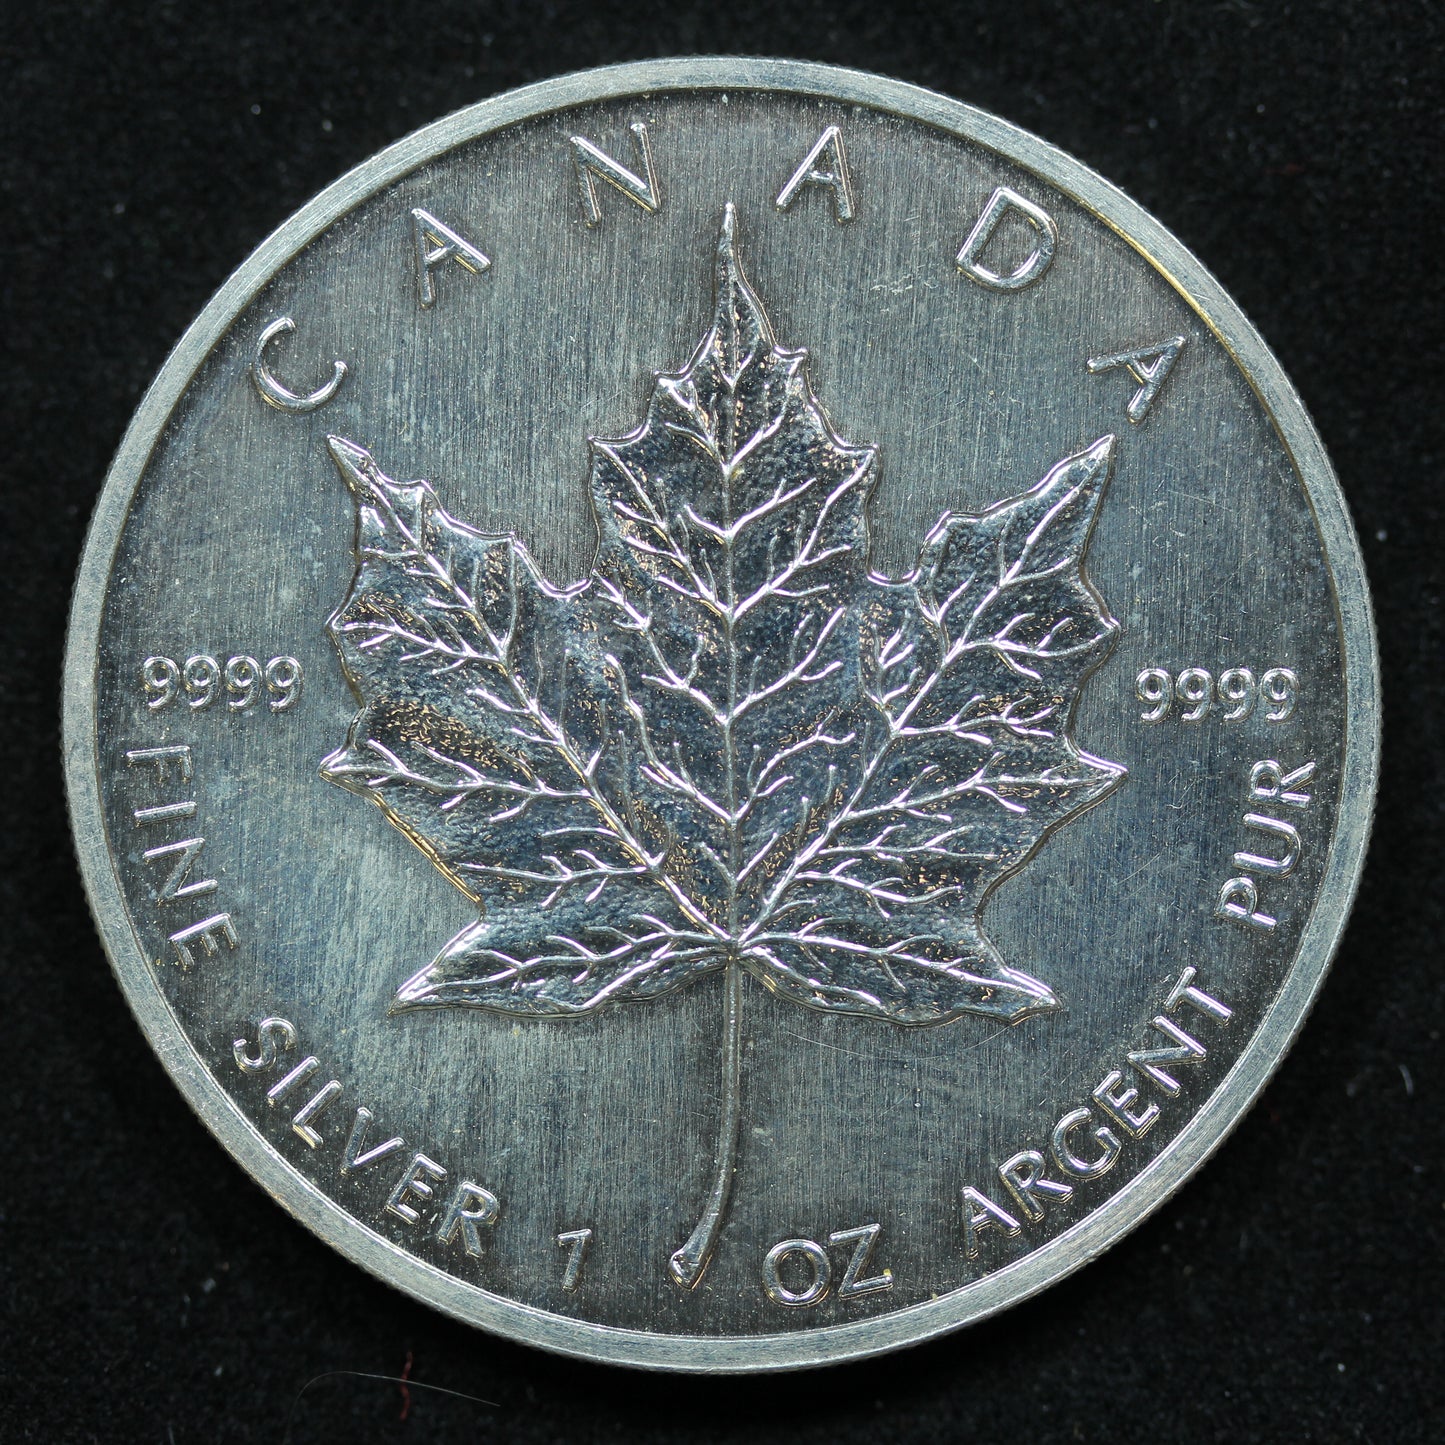 1989 Canadian Maple Leaf .9999 Fine Bullion Coin - Marks/Spots